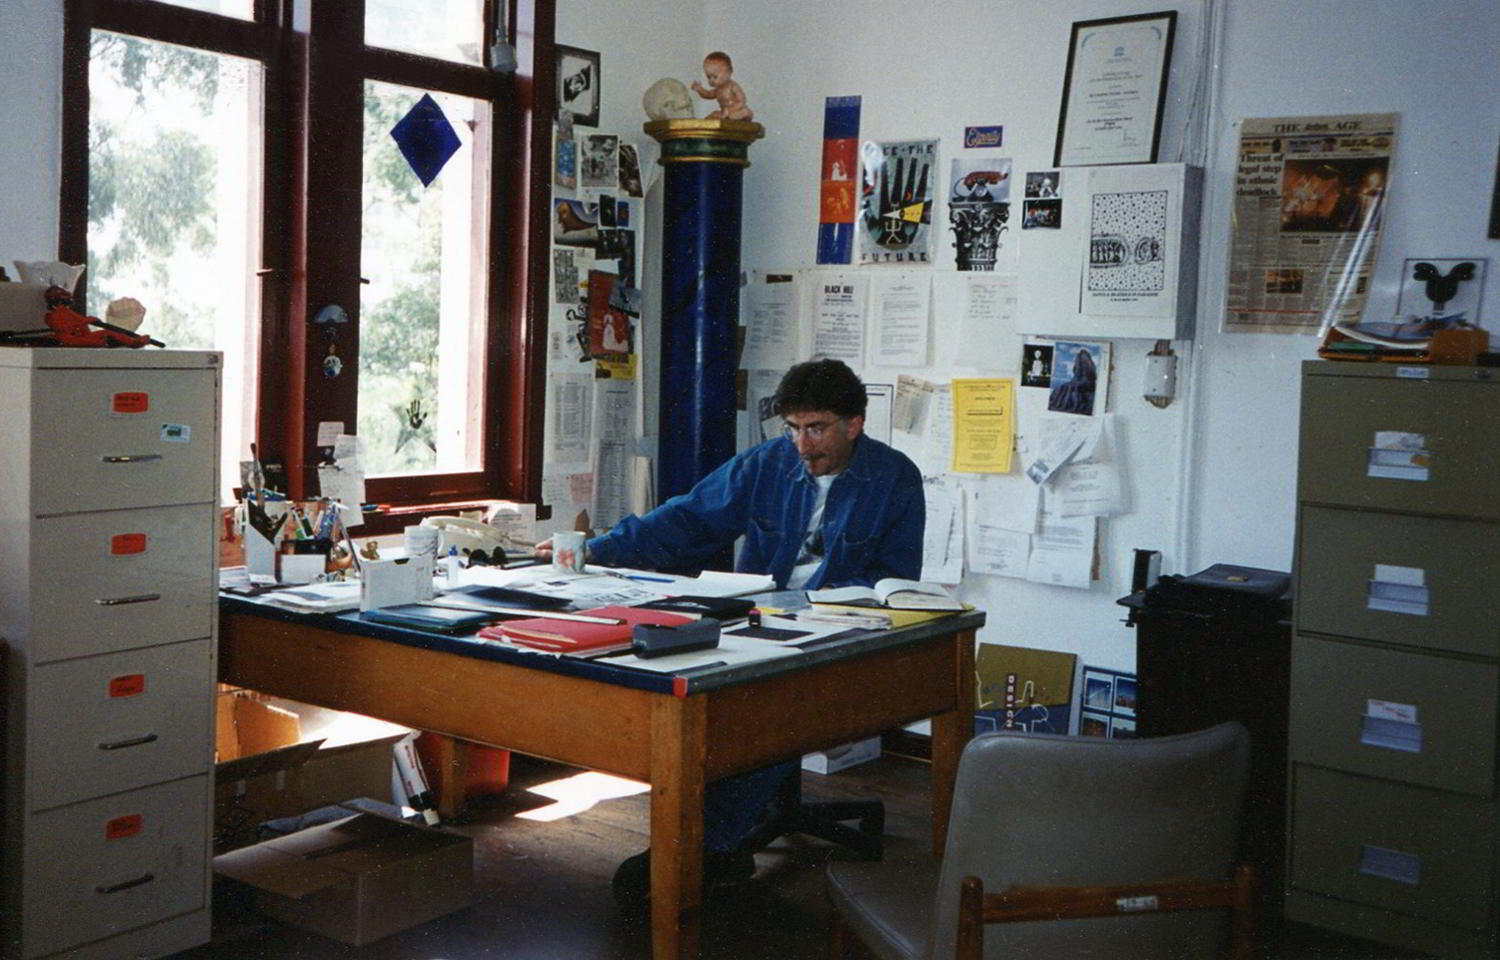 Artistic Director Ken Evans seated at a desk